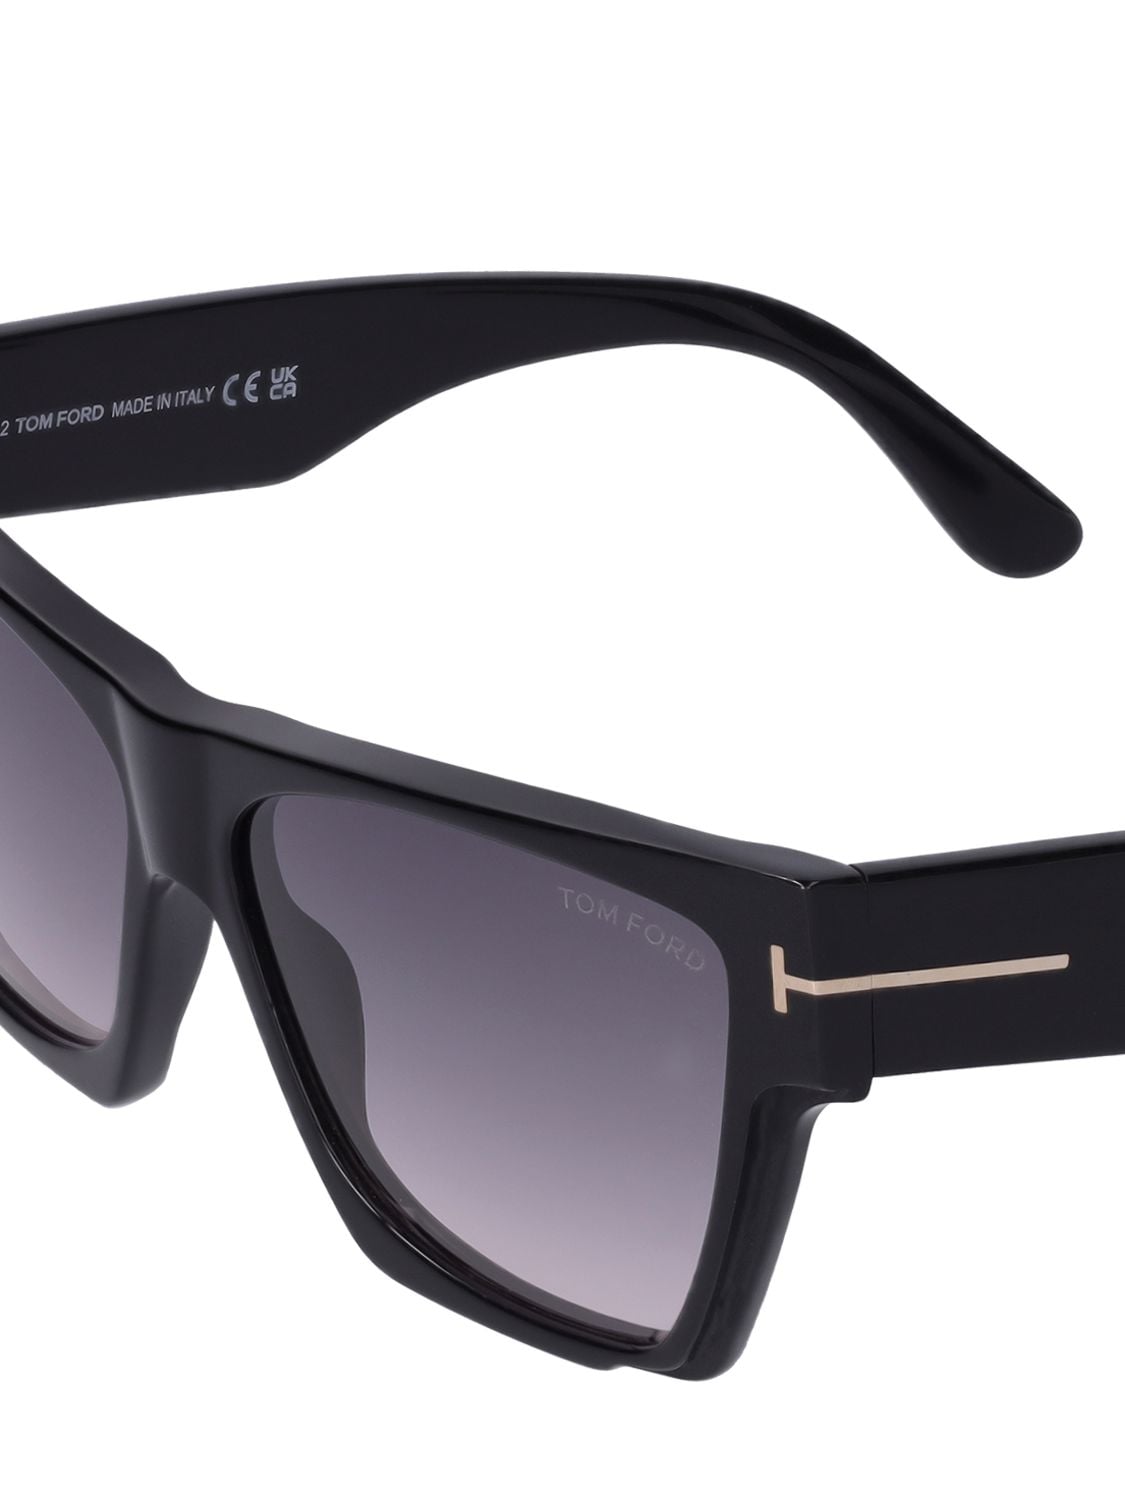 Tom Ford Dove Geometric 59mm Gradient Sunglasses In Black/grey | ModeSens